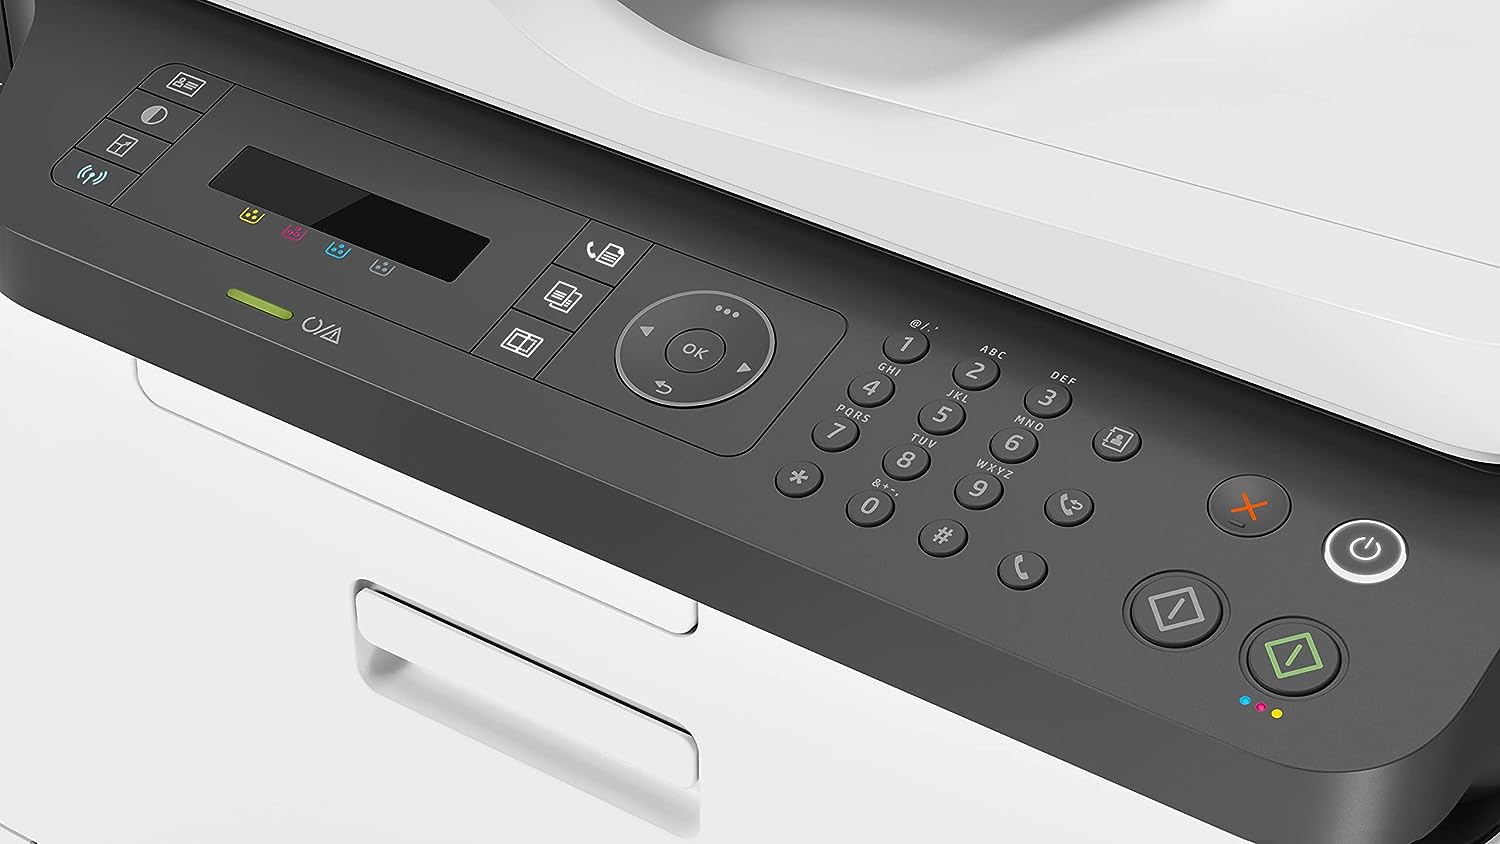 HP Color Laser 179fwg (4-in-1) Multifunktions- Farblaserdrucker (Drucker, Scanner, Kopierer, Fax, WLAN, Airprint)